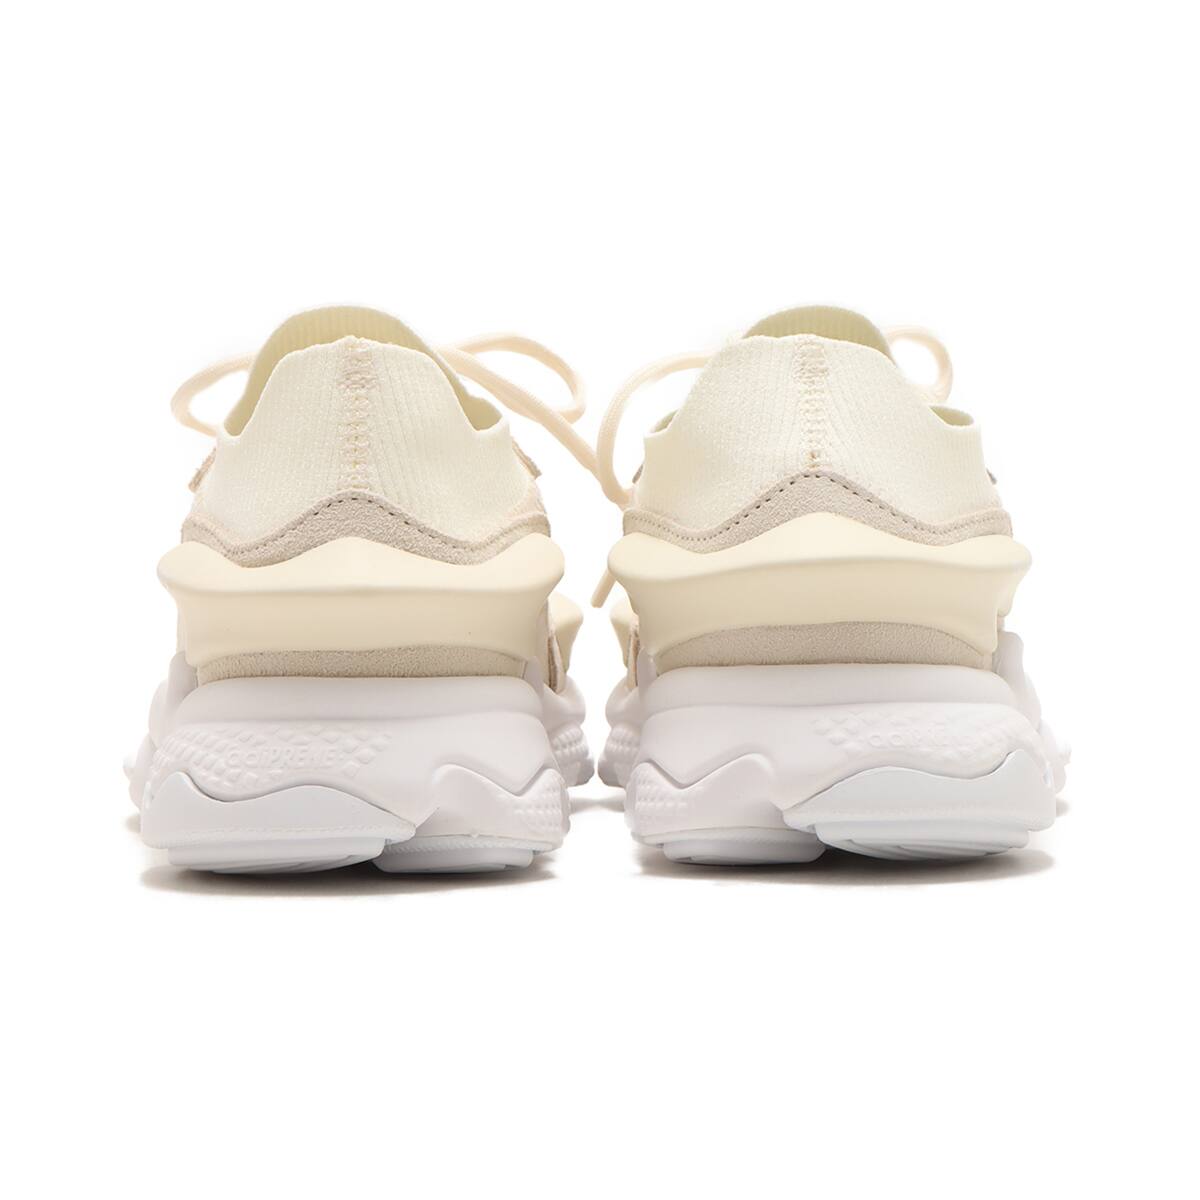 adidas IVY PARK OZWEEGO KNITTED CREAMWHITE/FOOTWEAR WHITE